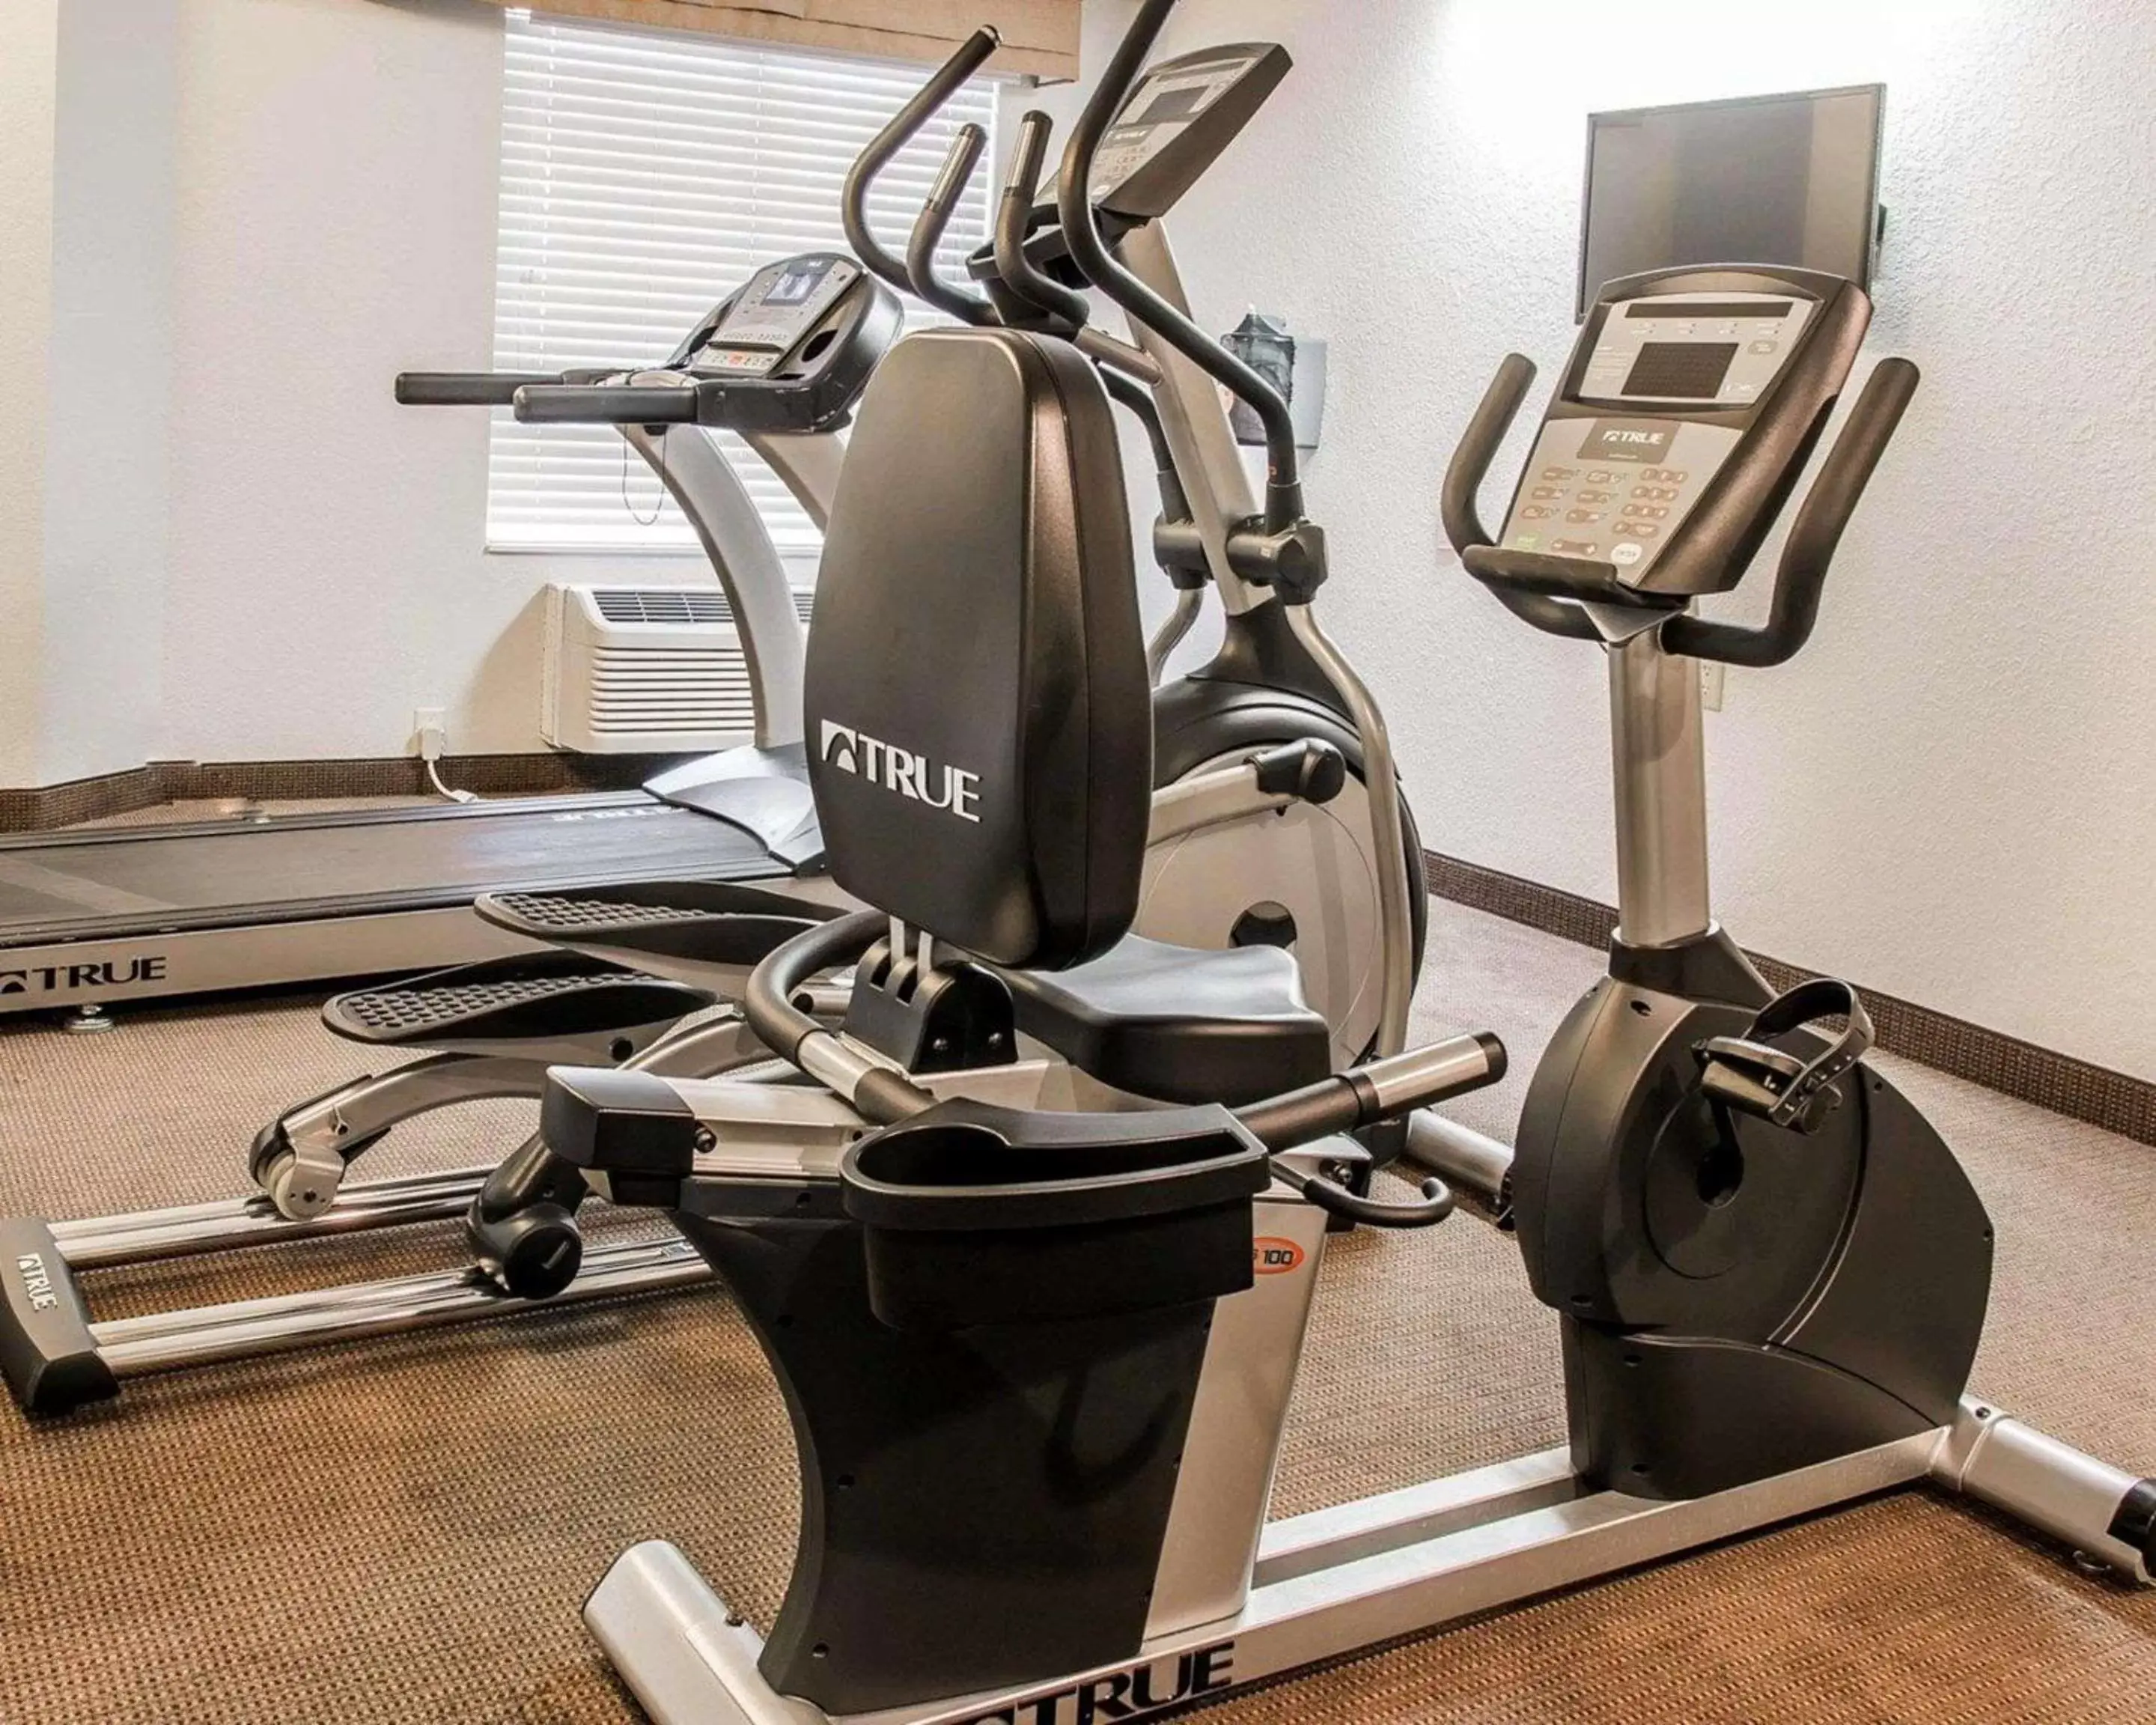 Fitness centre/facilities, Fitness Center/Facilities in Sleep Inn Midland